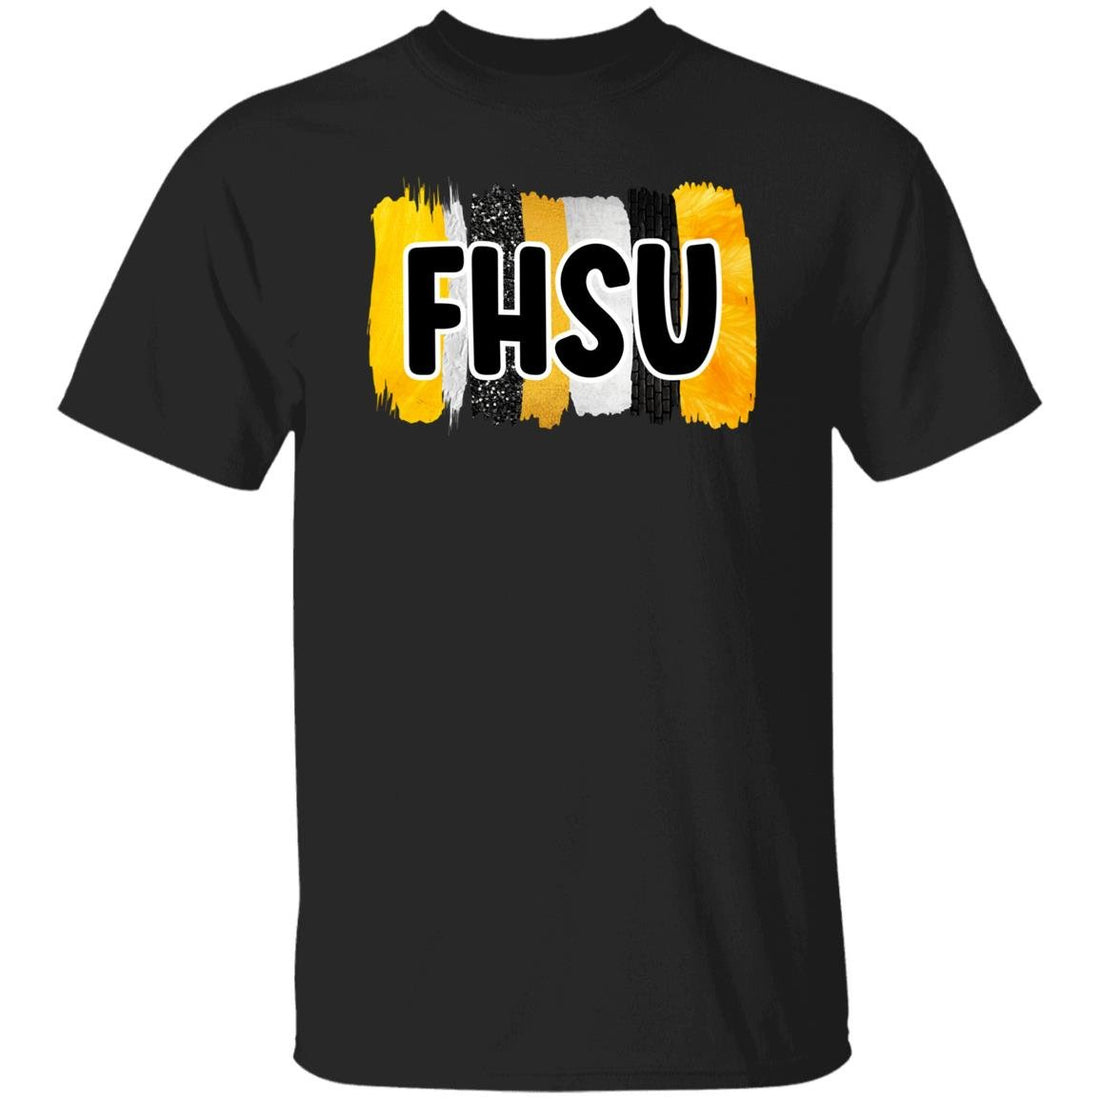 FHSU Paint Swipes T-Shirt - T-Shirts - Positively Sassy - FHSU Paint Swipes T-Shirt